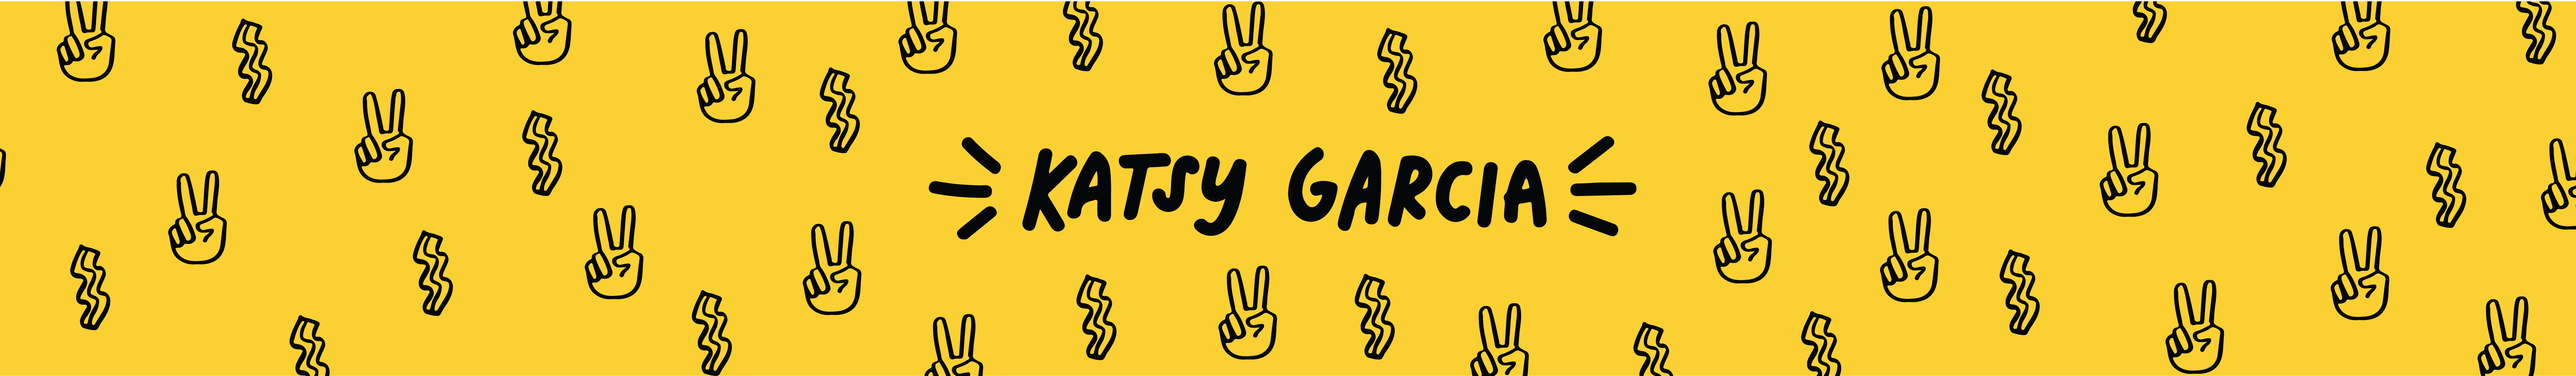 Katsy Garcia's profile banner